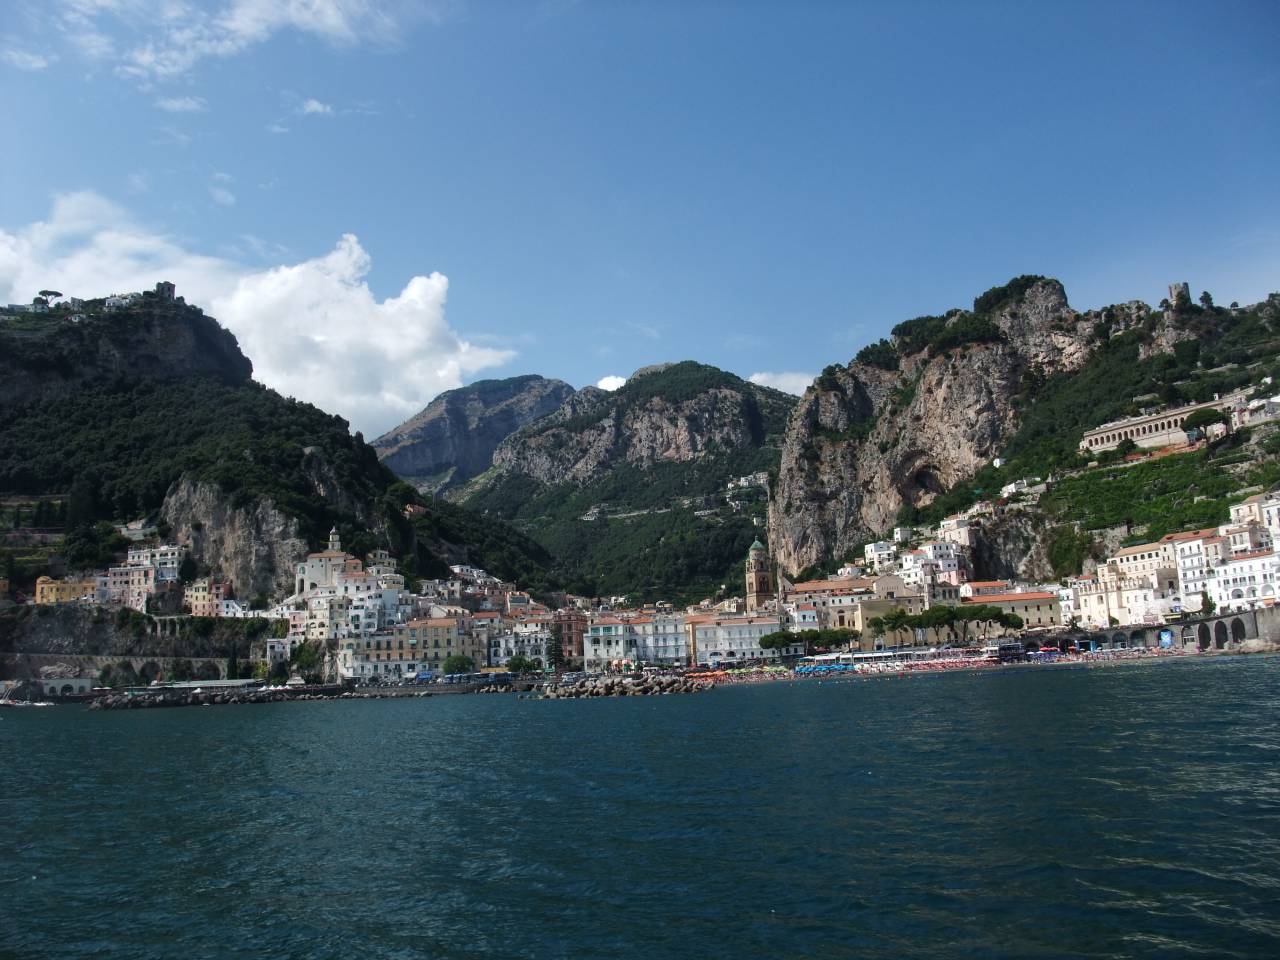 The Amalfi Coast: DSCF8748